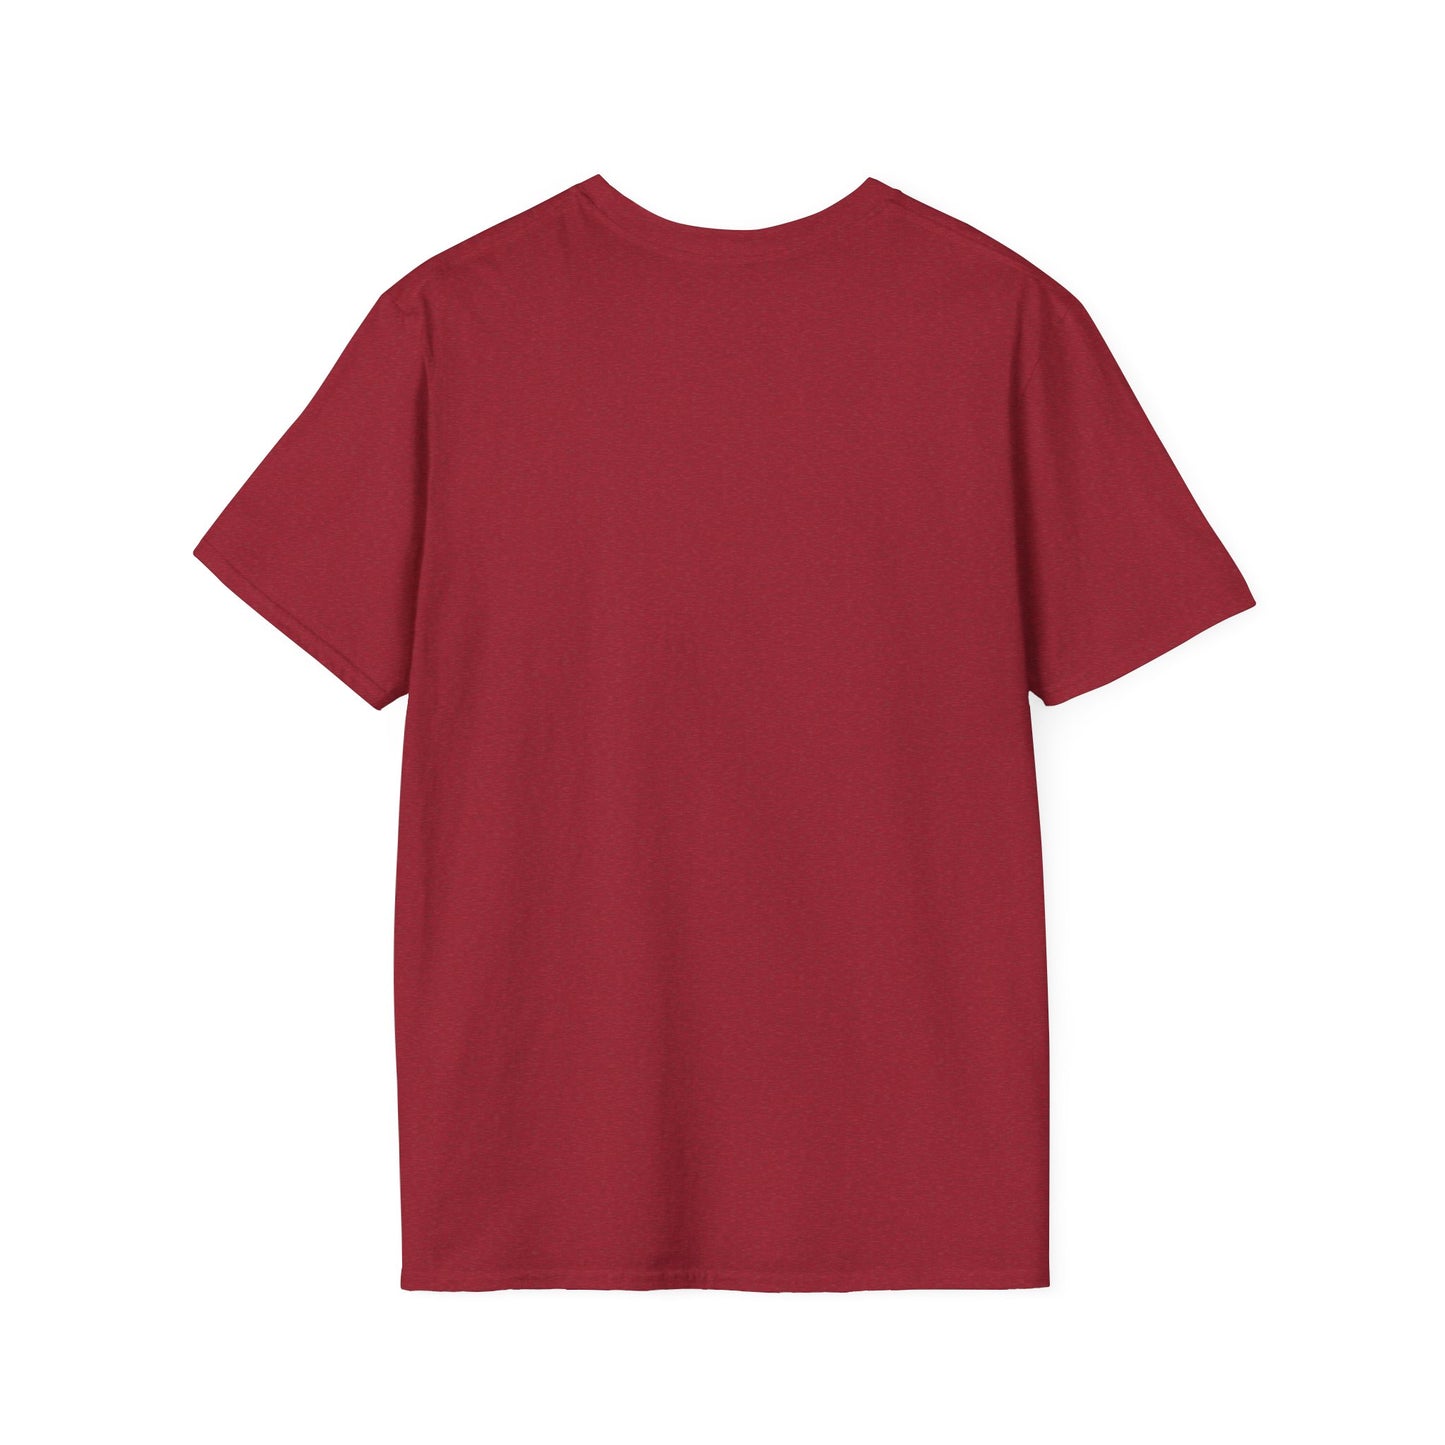 SCHNAUZER POWER Unisex Softstyle T-Shirt